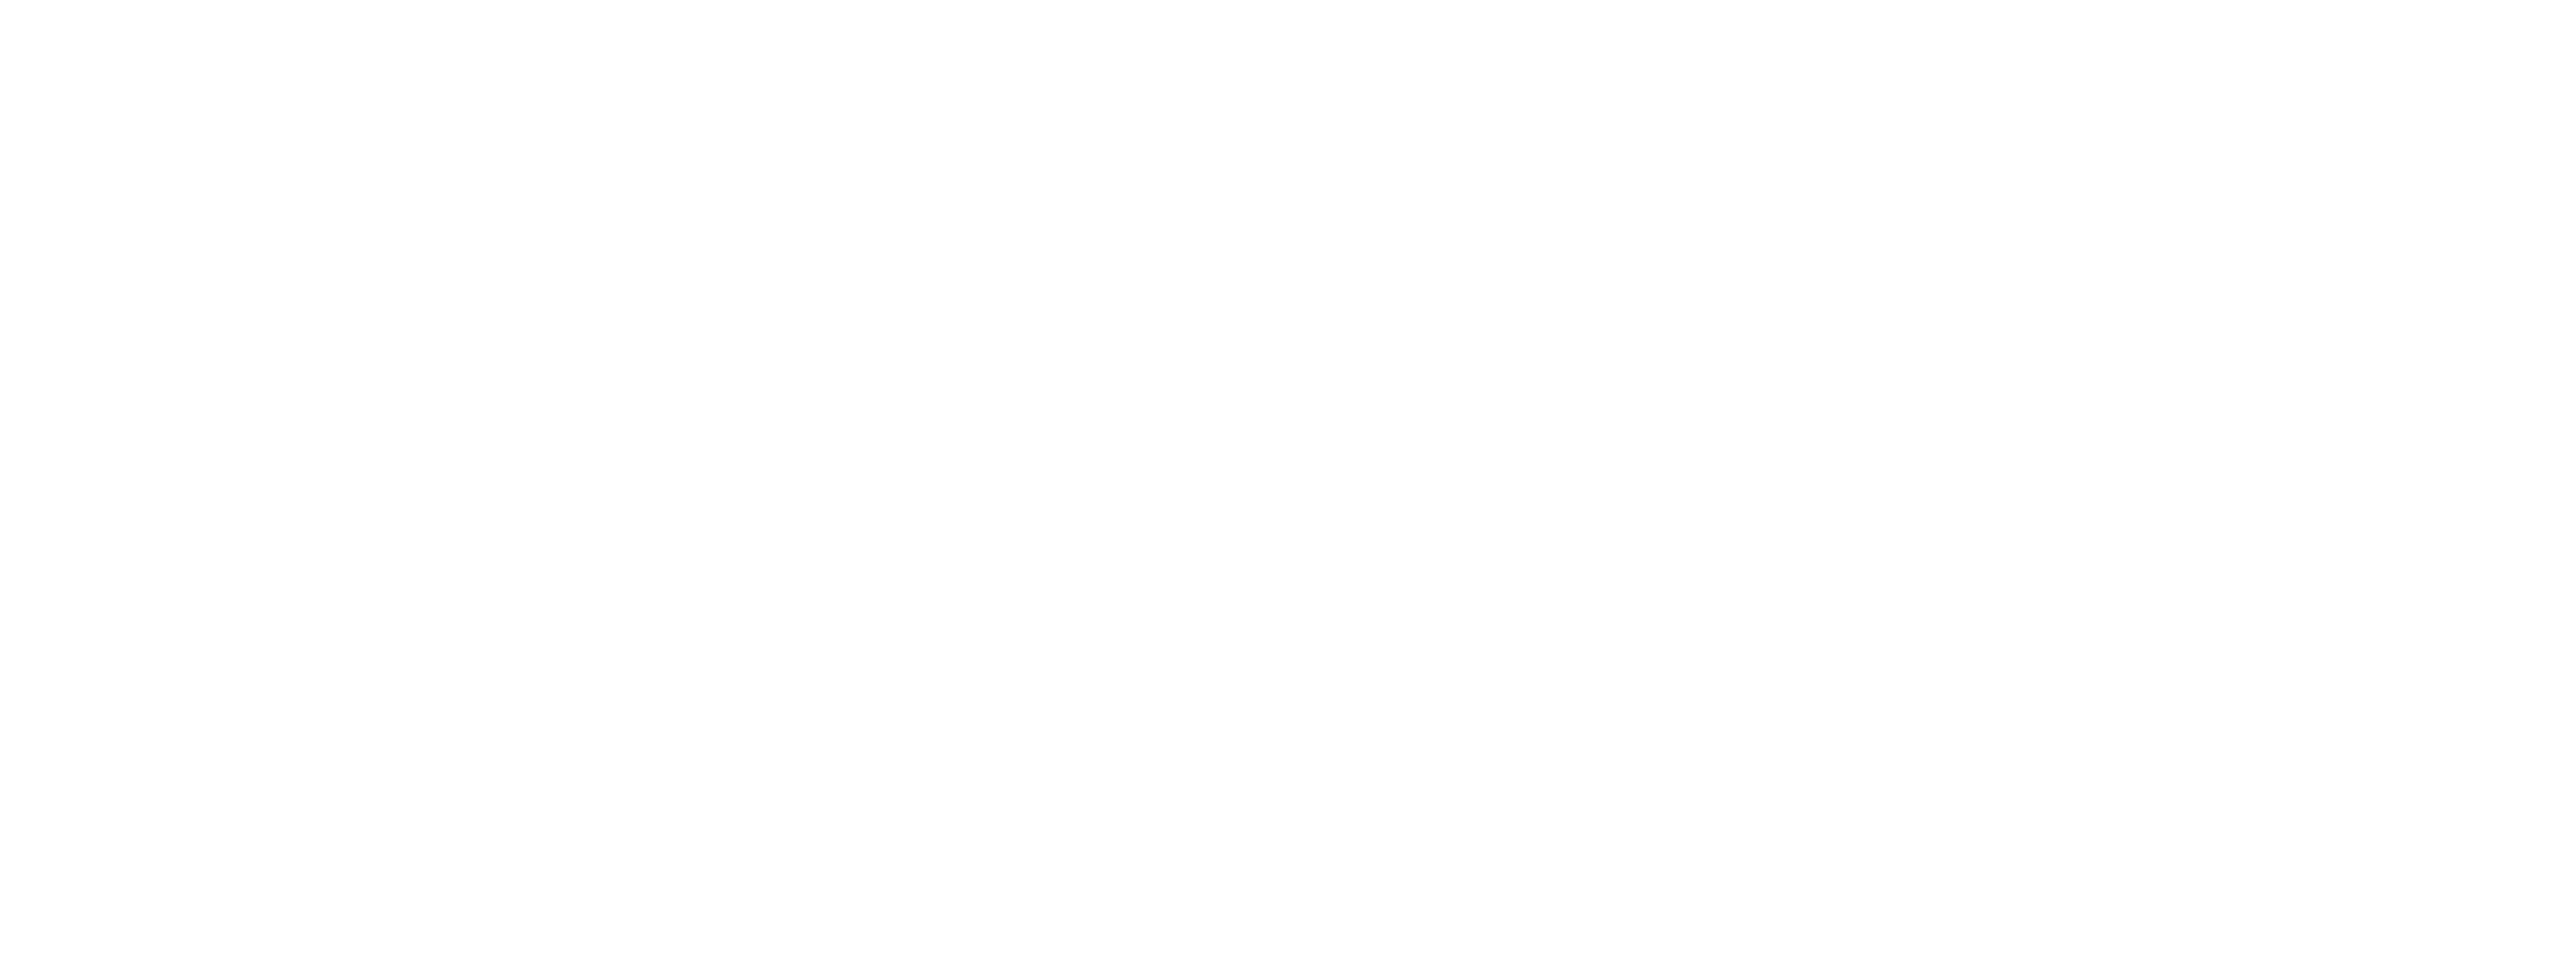 Zak Thomas Johnson Photography